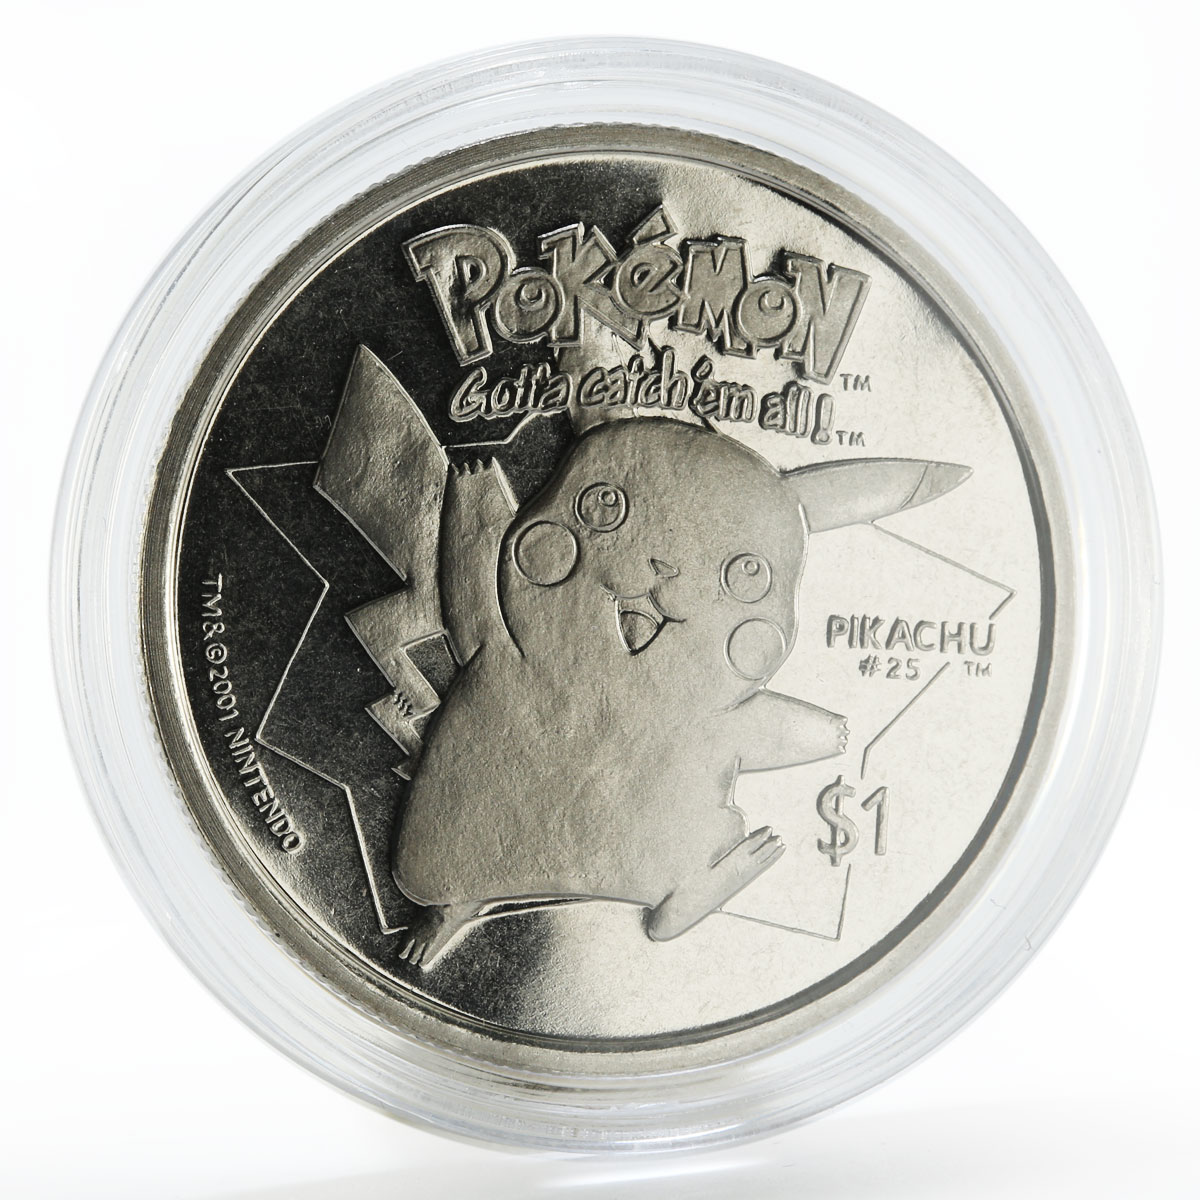 Niue 1 dollar Pokemon Pikachu copper-nickel coin 2001